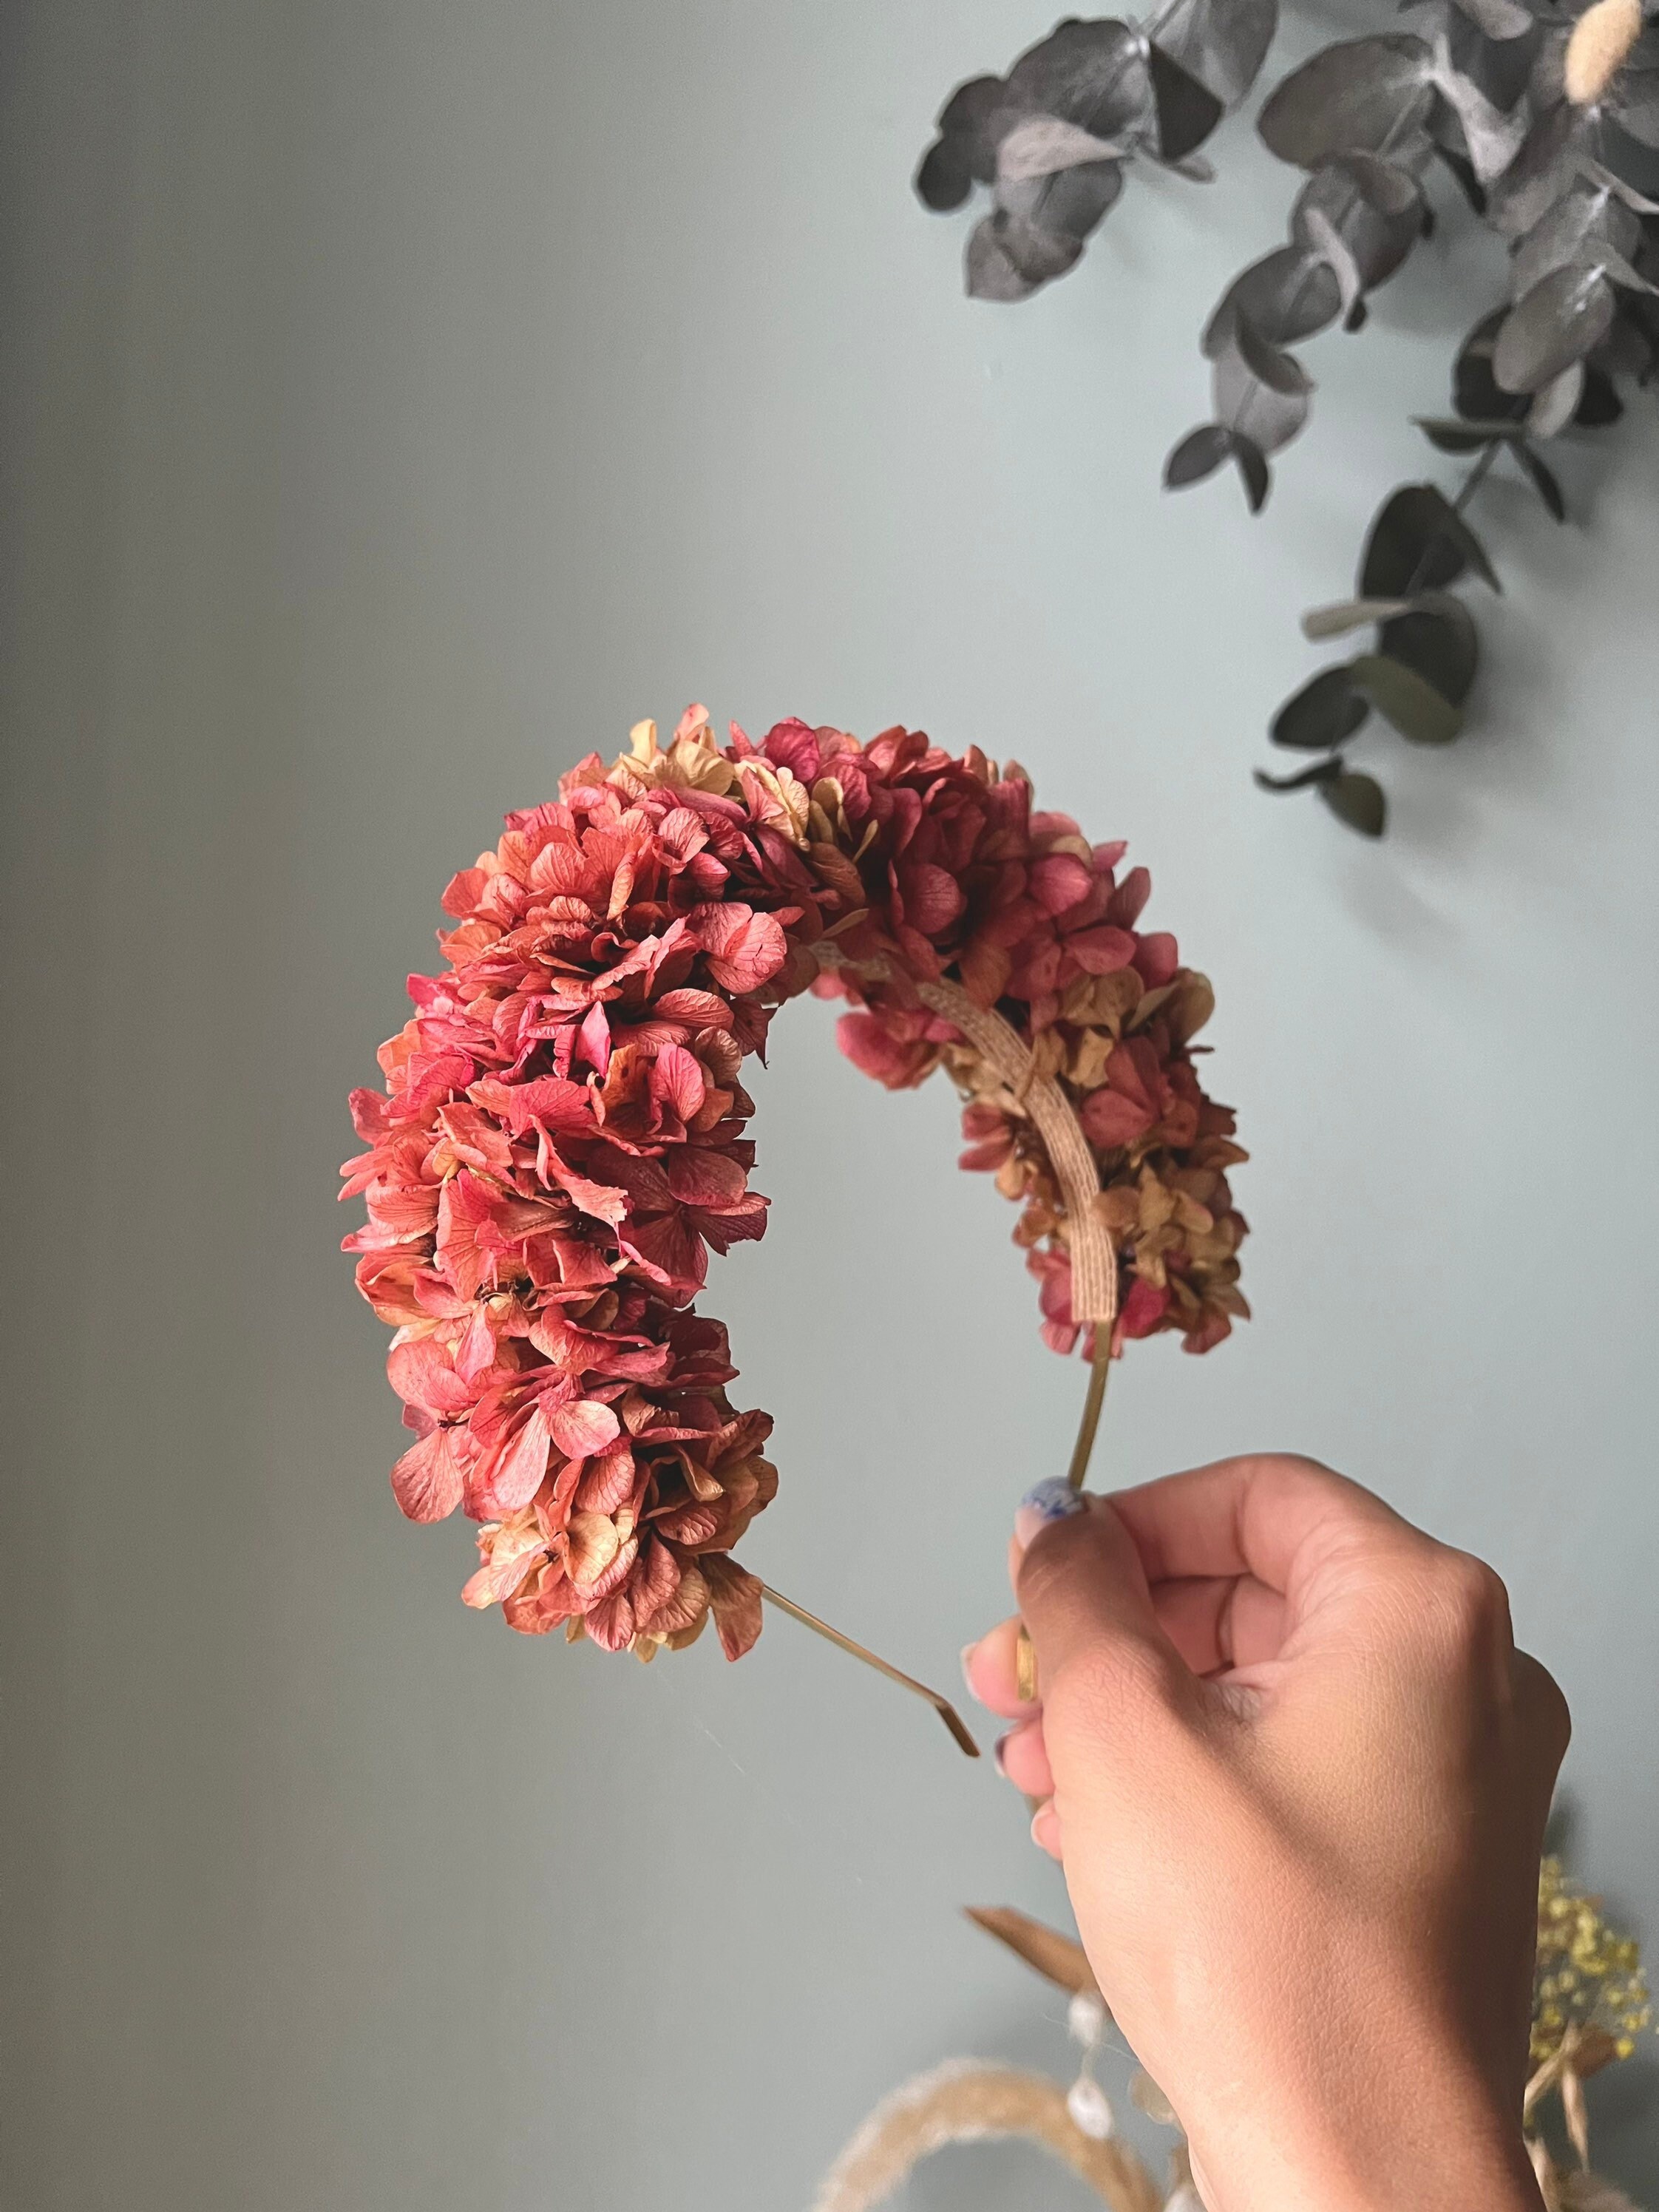 Boho Bridal Dusky Pink Flower Crown, Barn Wedding Hair Piece, Dried Wreath Tiara Gold, Accessories Hansmade Real Floral